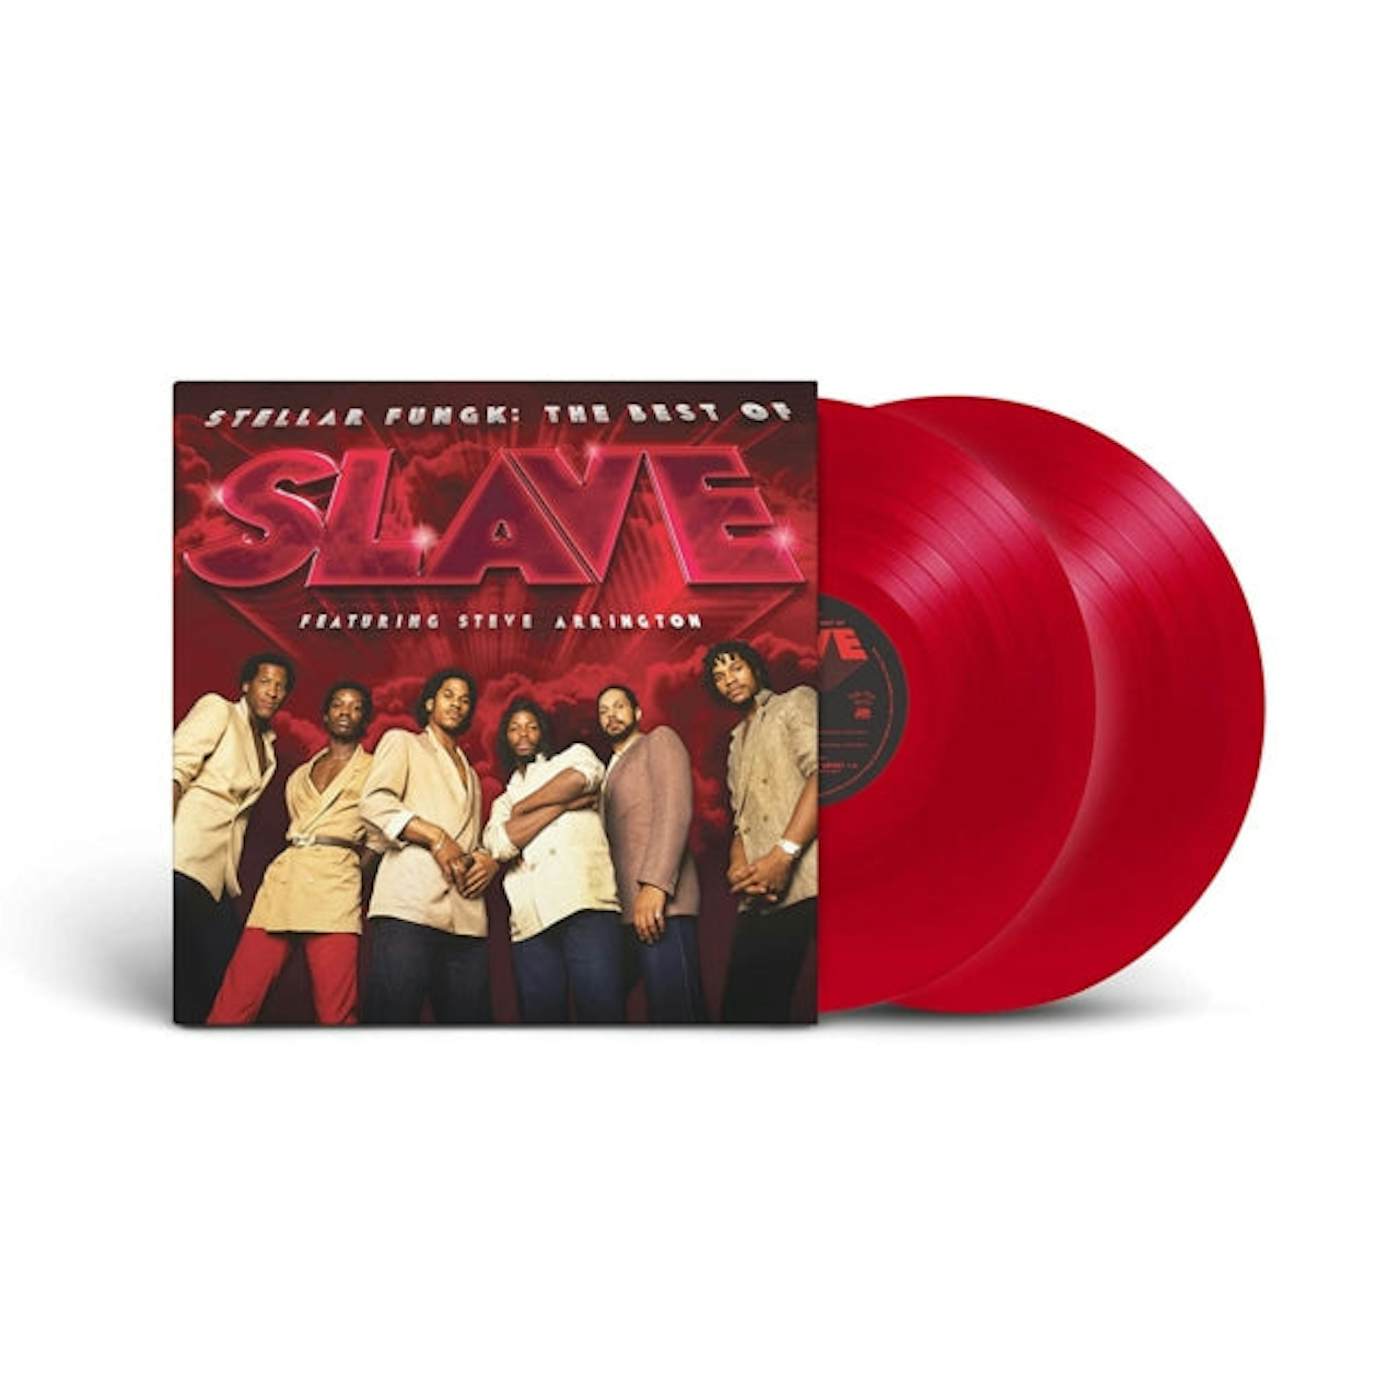  Slave LP - Stellar Fungk The Best Of Sla (Vinyl)